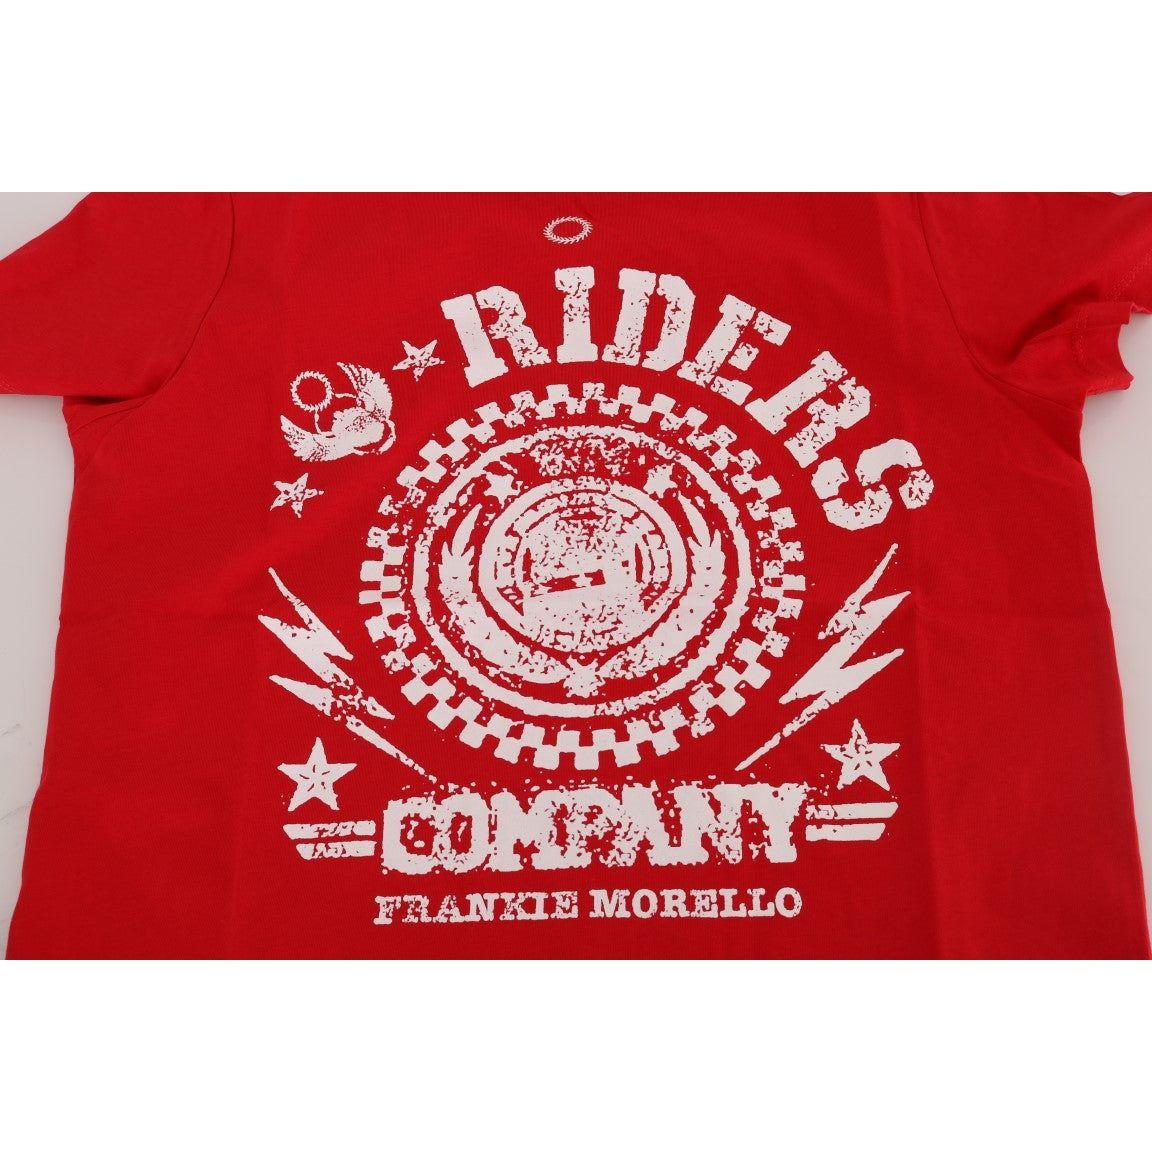 Frankie Morello Chic Red 'RIDERS' Motive Crewneck Tee red-cotton-riders-crewneck-t-shirt 463837-red-cotton-riders-crewneck-t-shirt-4.jpg